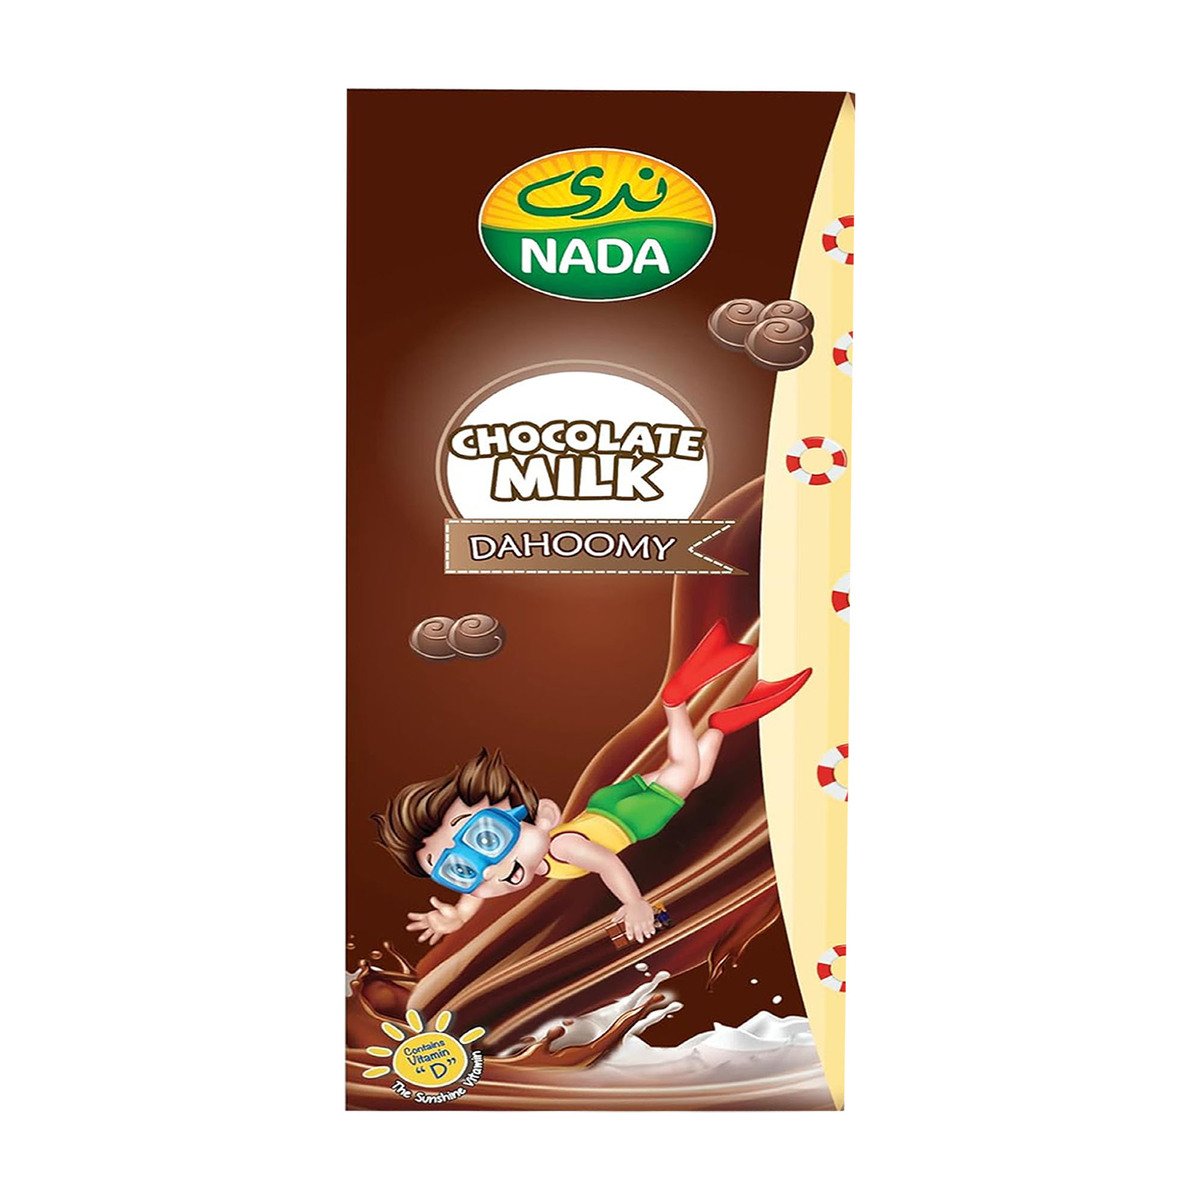 Nada Dahoomy Chocolate Milk 18 x 185 ml